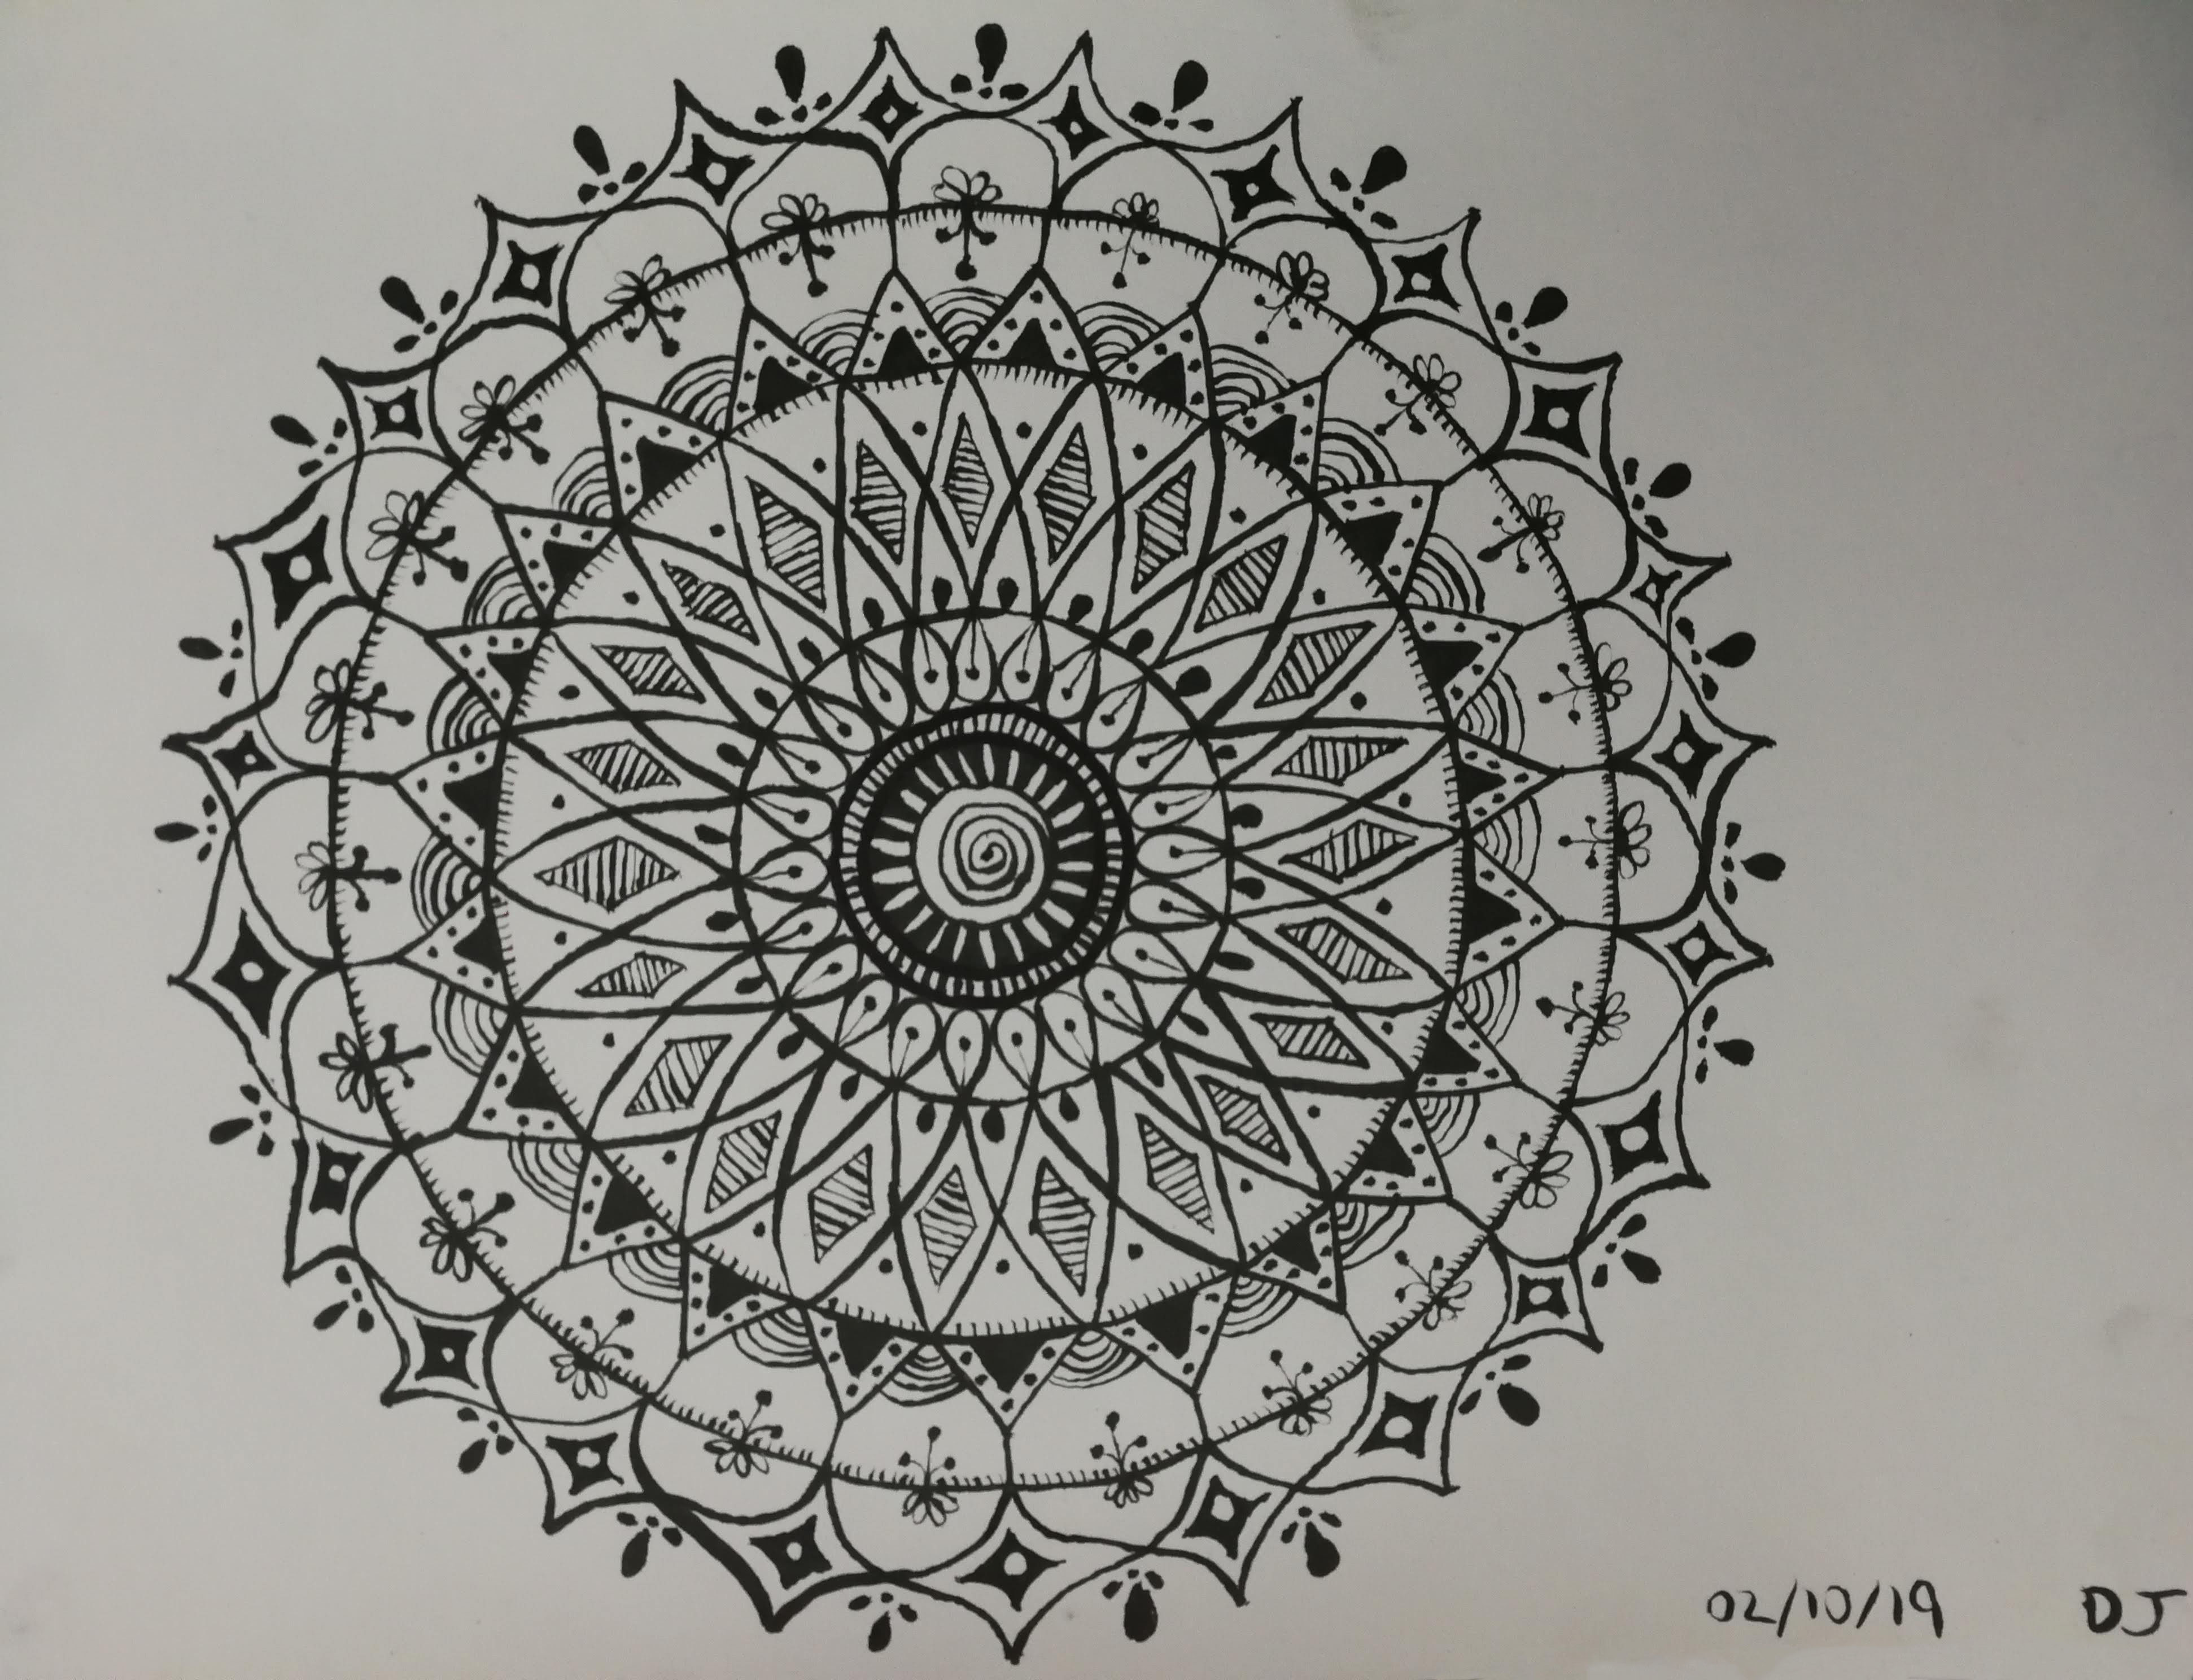 Mandala I drew for day 2 of Inktober 2019